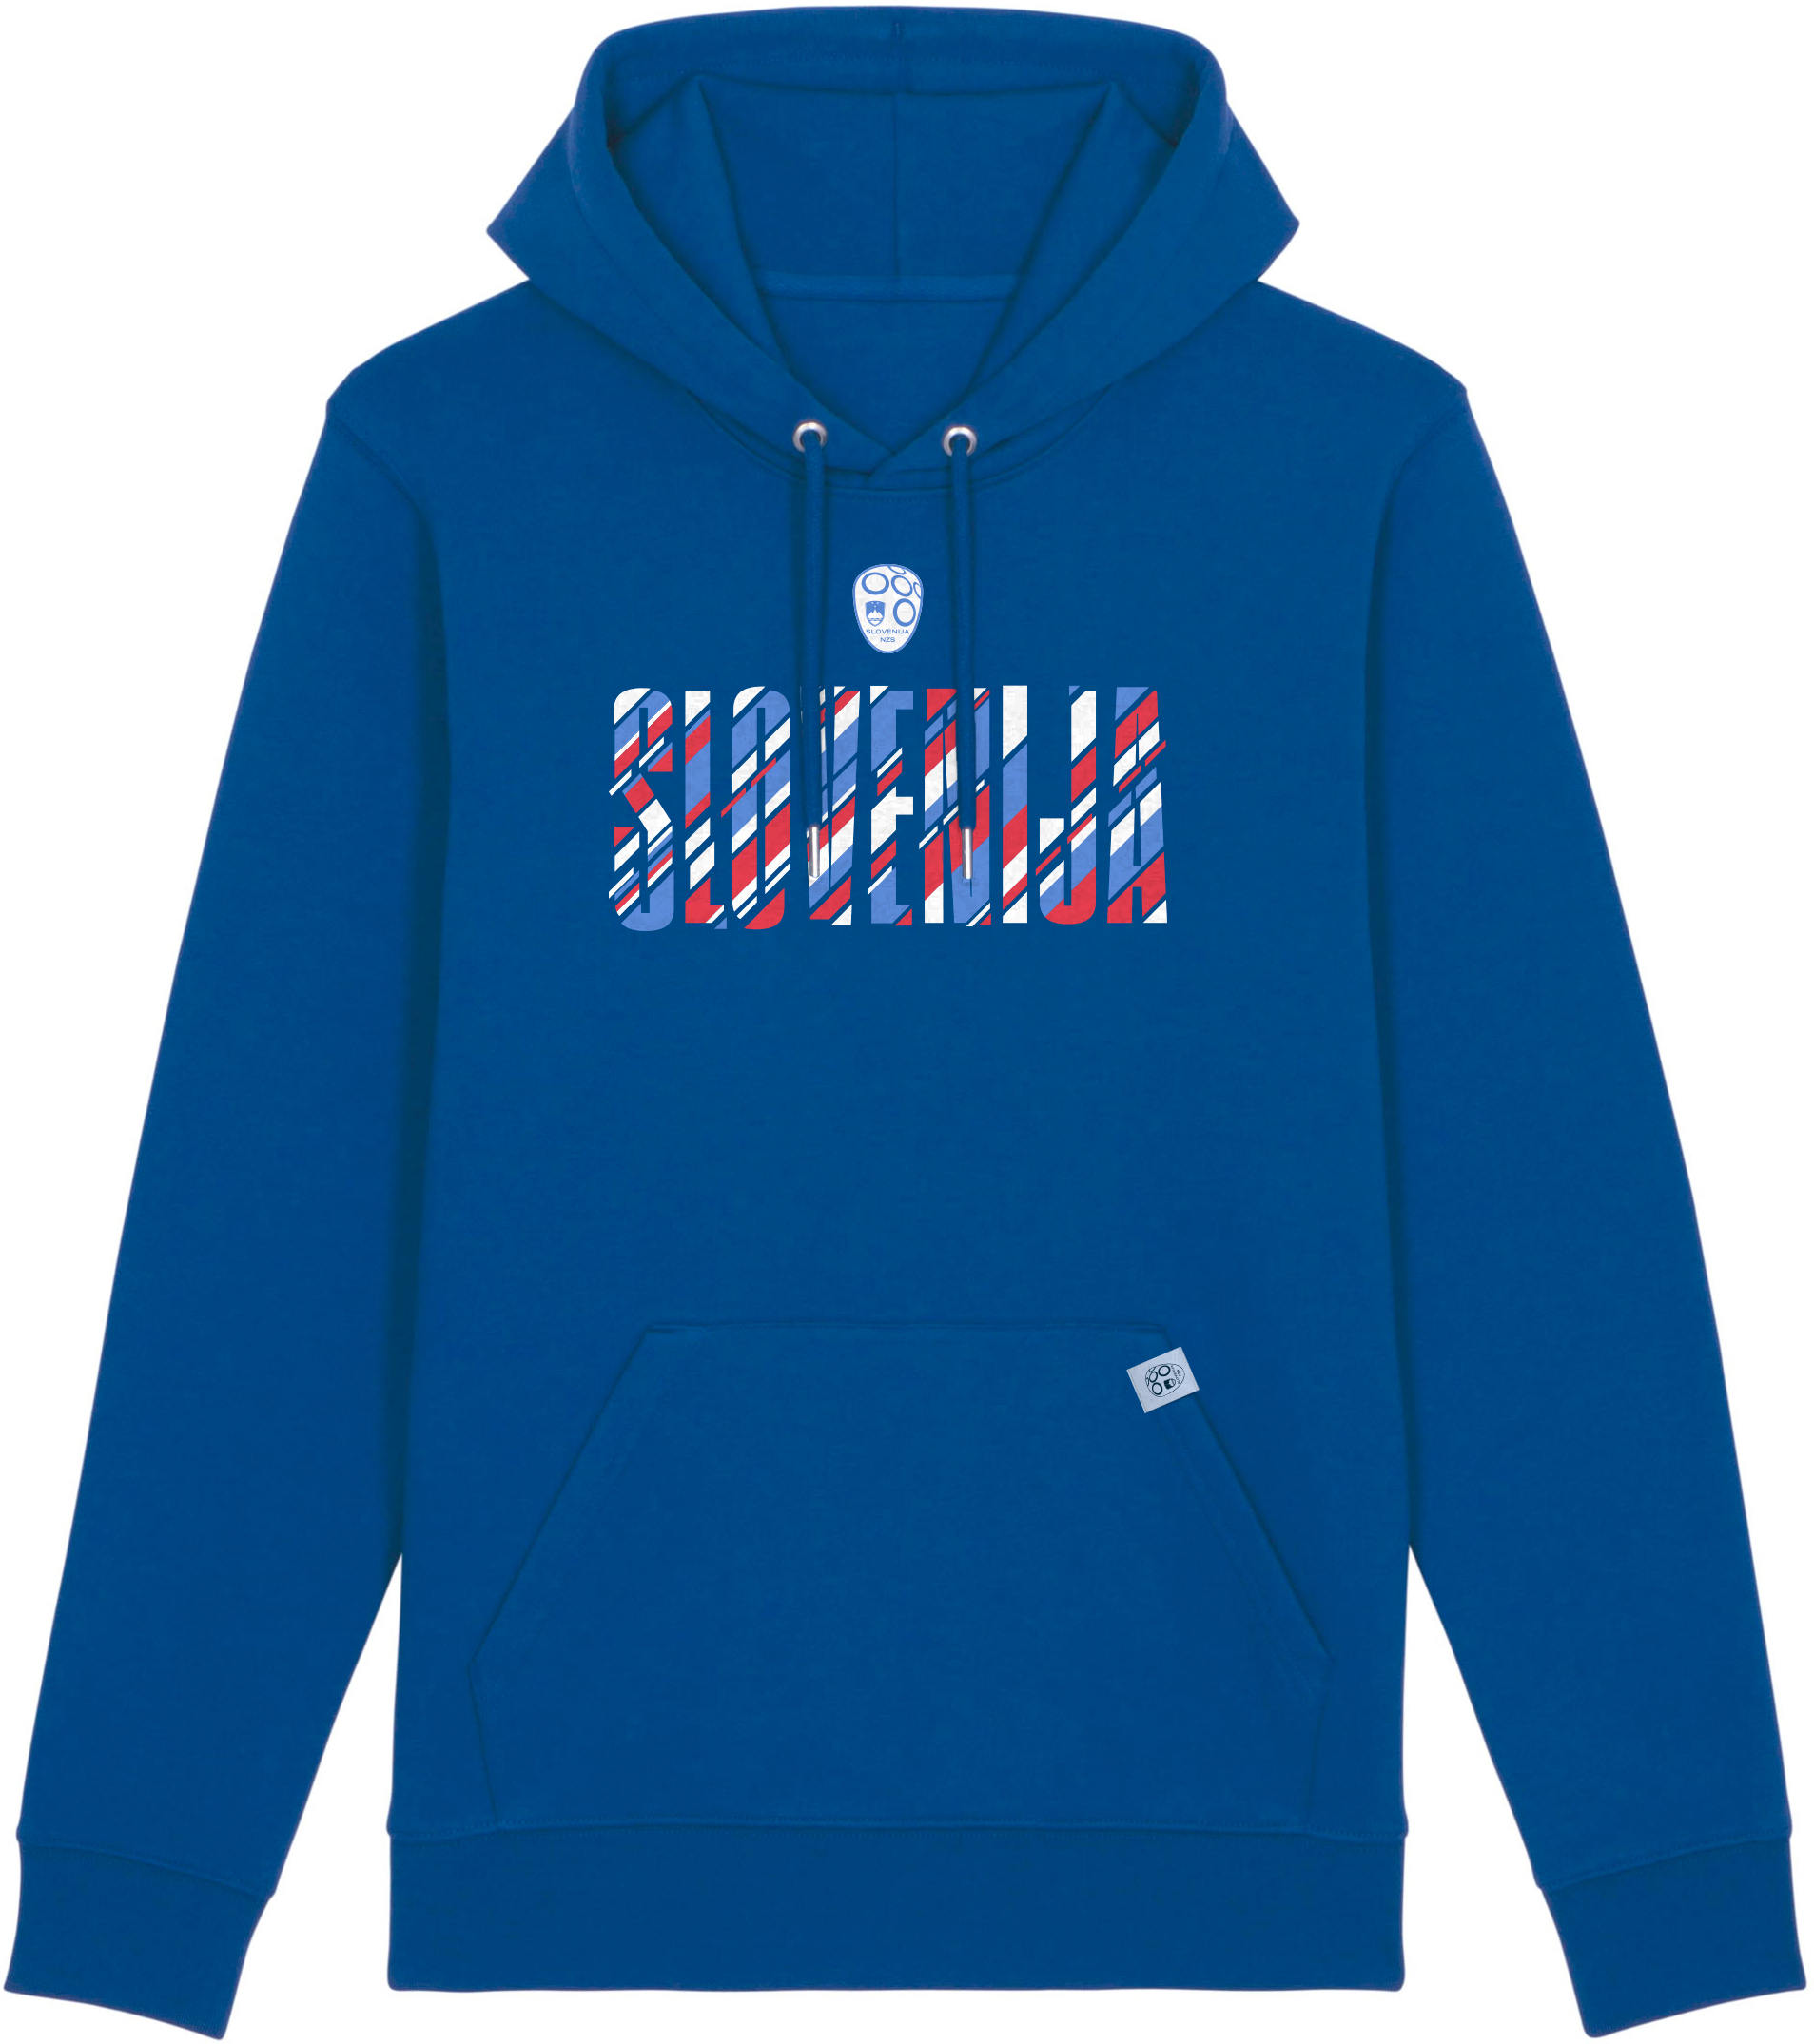 Sweatshirt med hætte Nike NZSx11TS SRCE BIJE UNISEX blue hoody